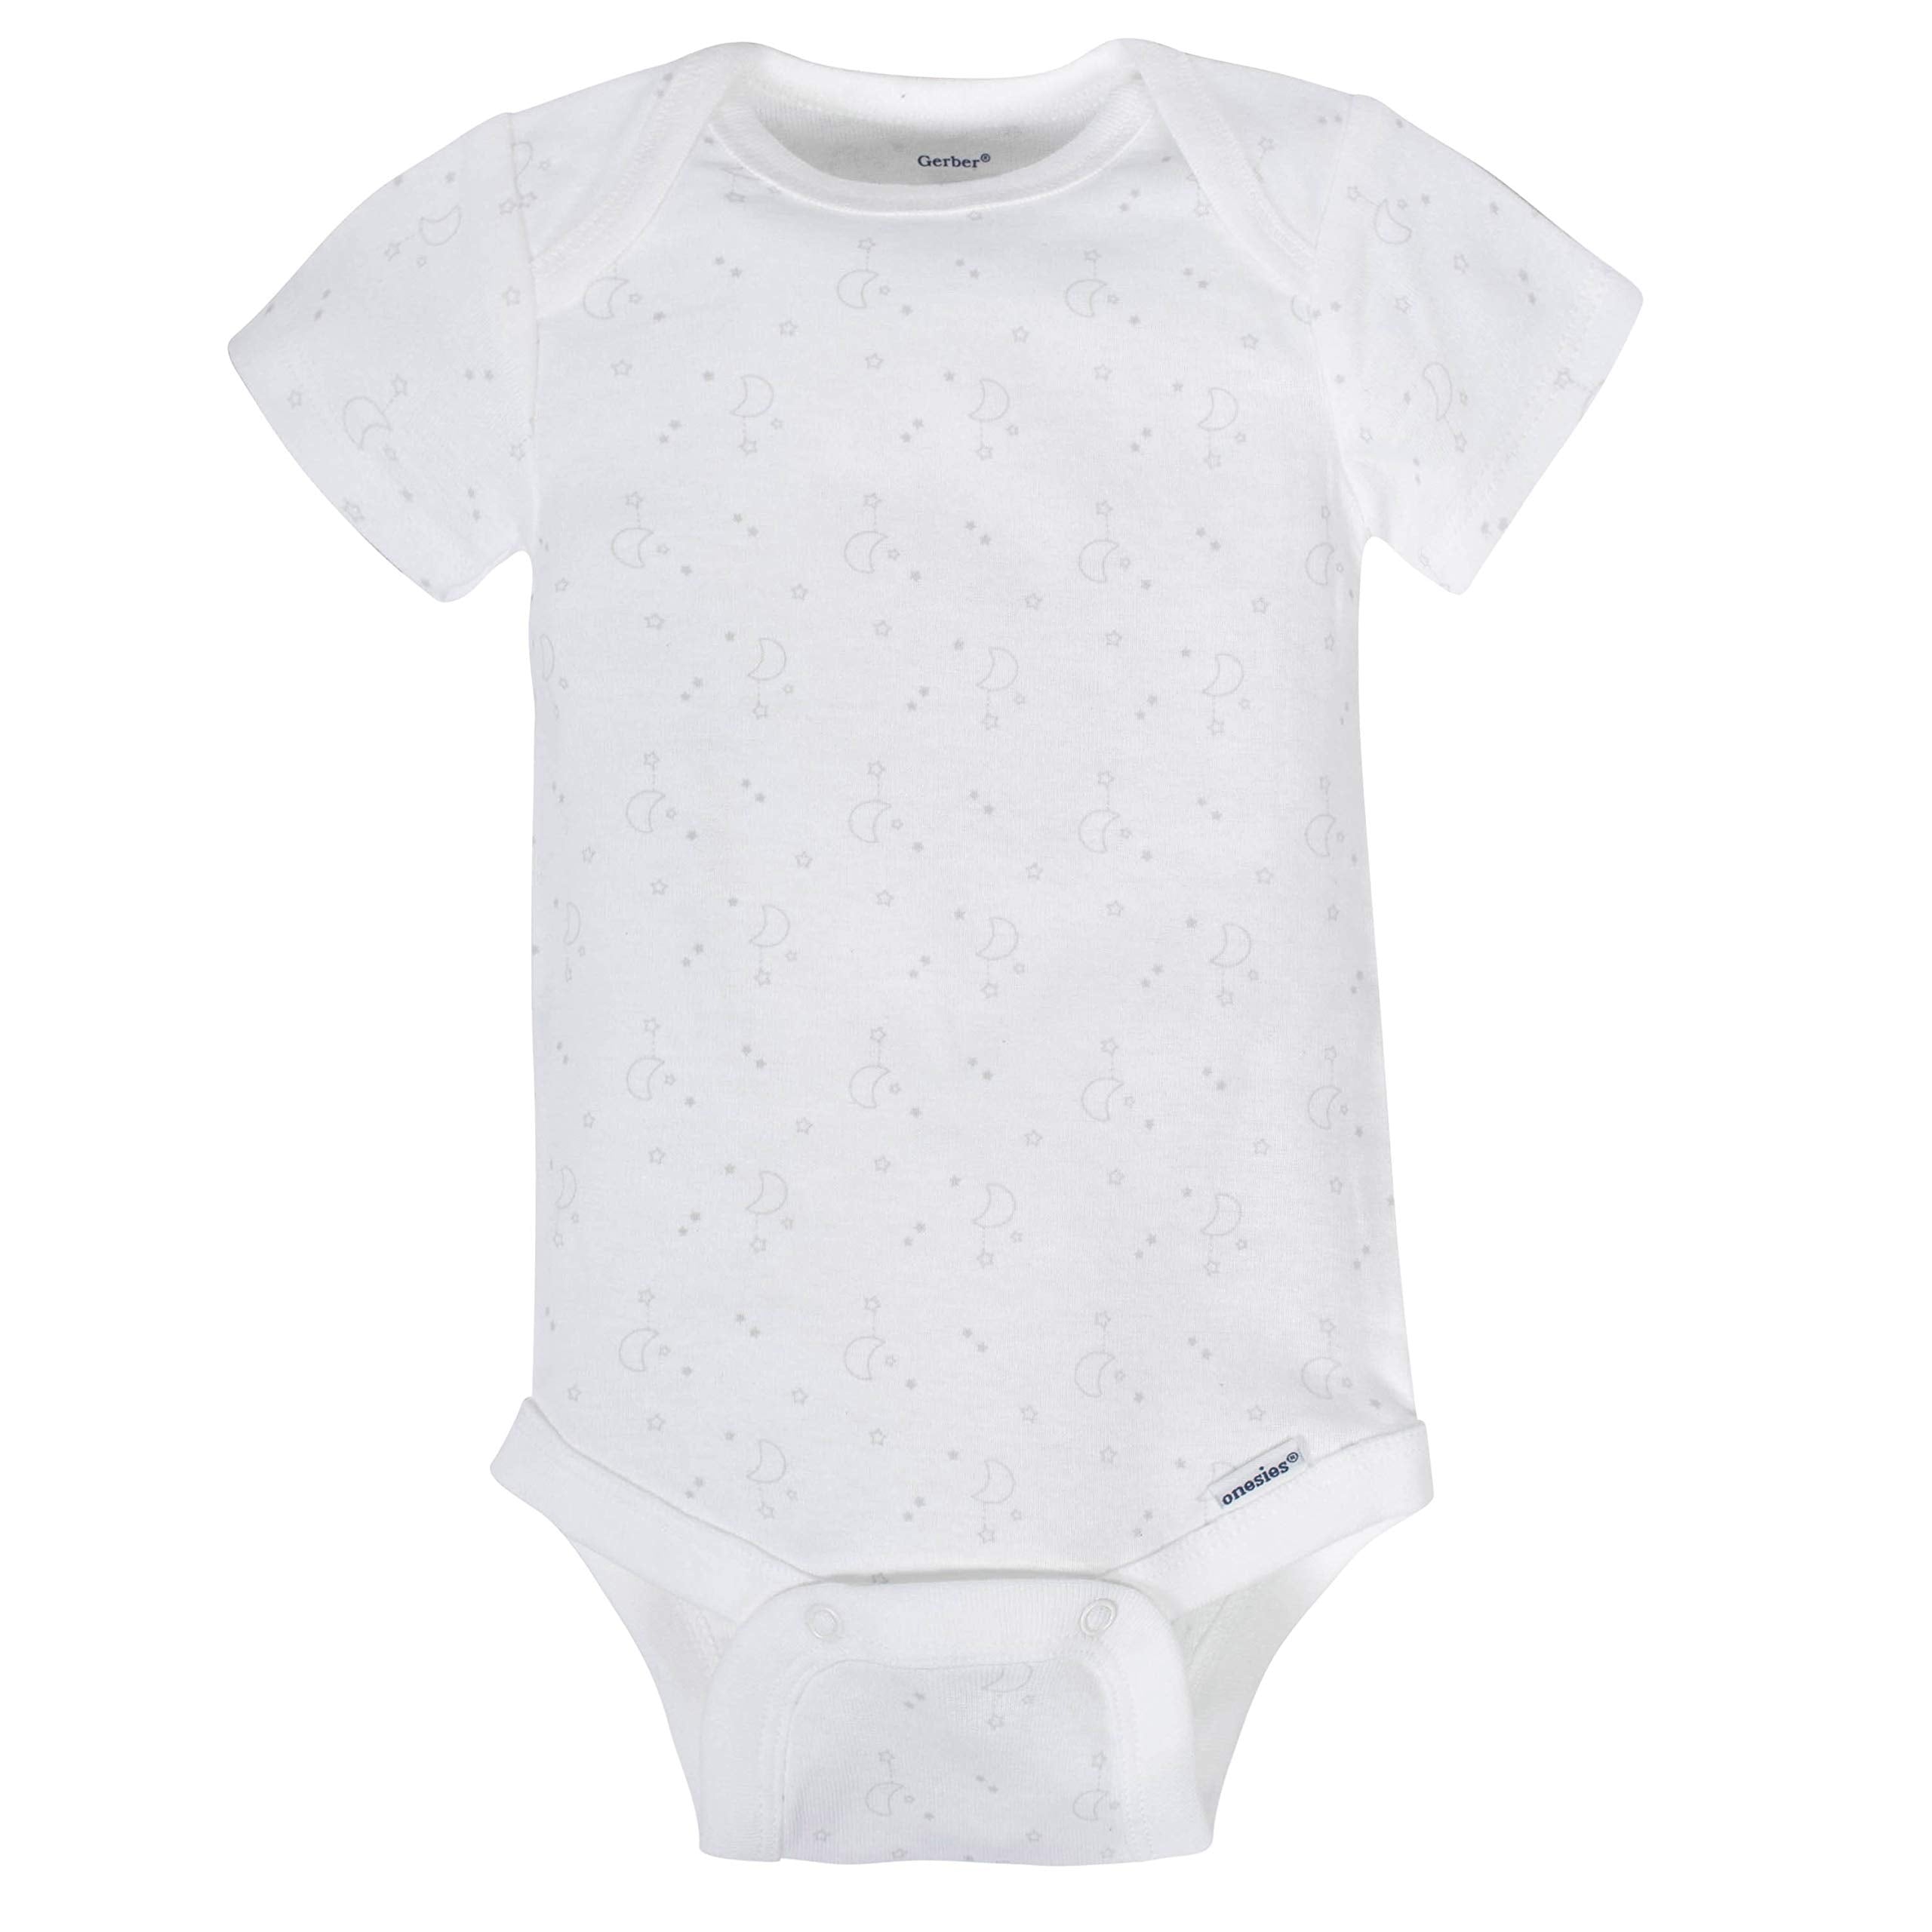 Gerber Baby 8-Pack Short Sleeve Onesies Bodysuits, Animals Green, 0-3 Months